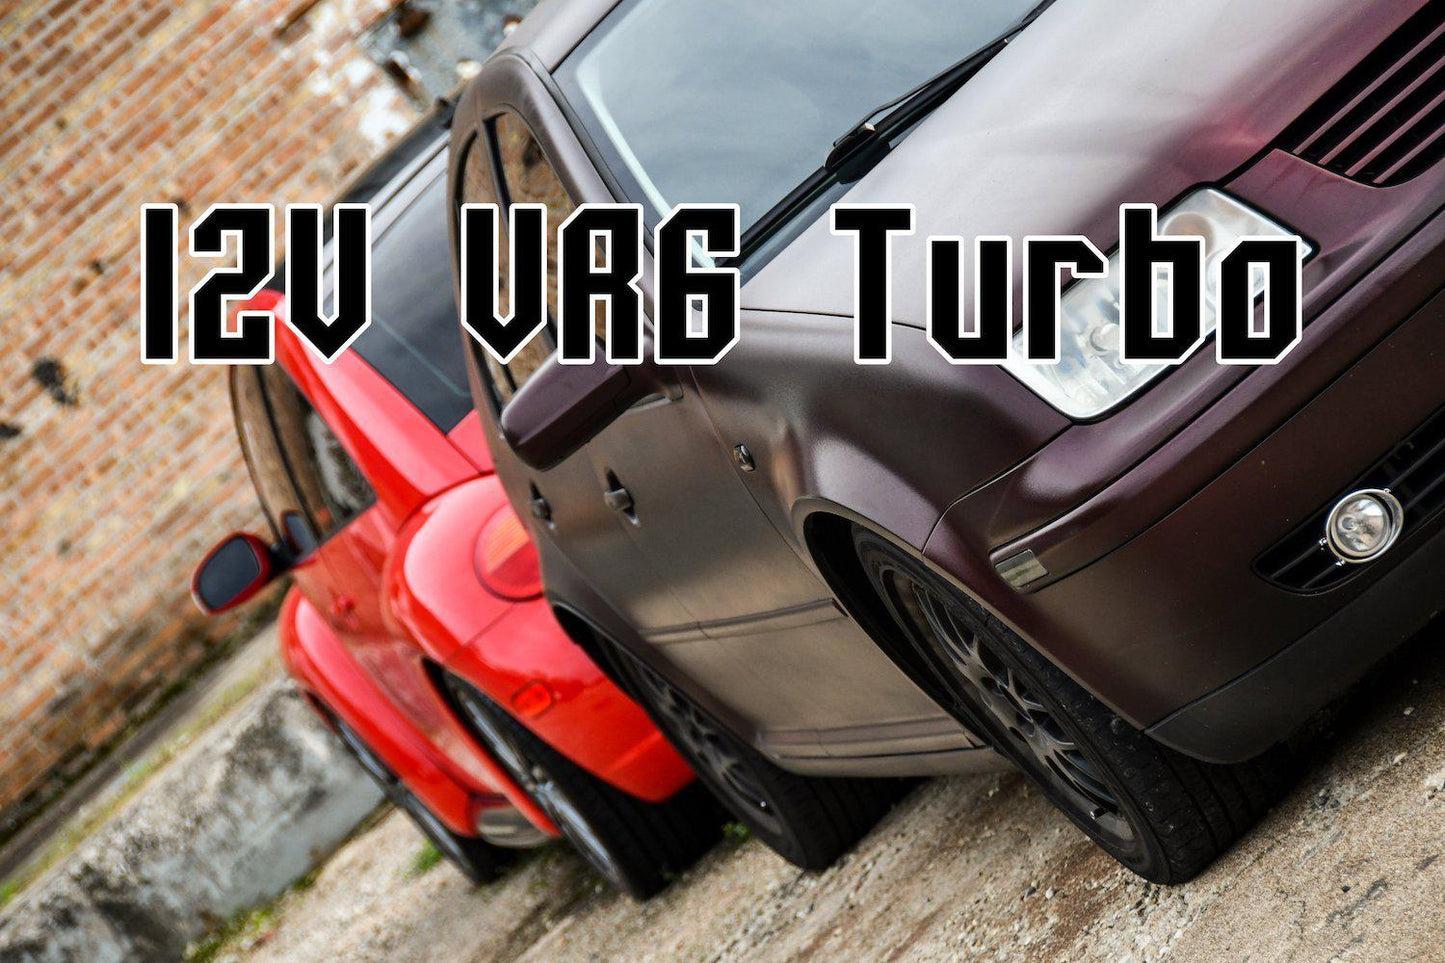 06a-technik - 12V VR6 Turbo Tune - 